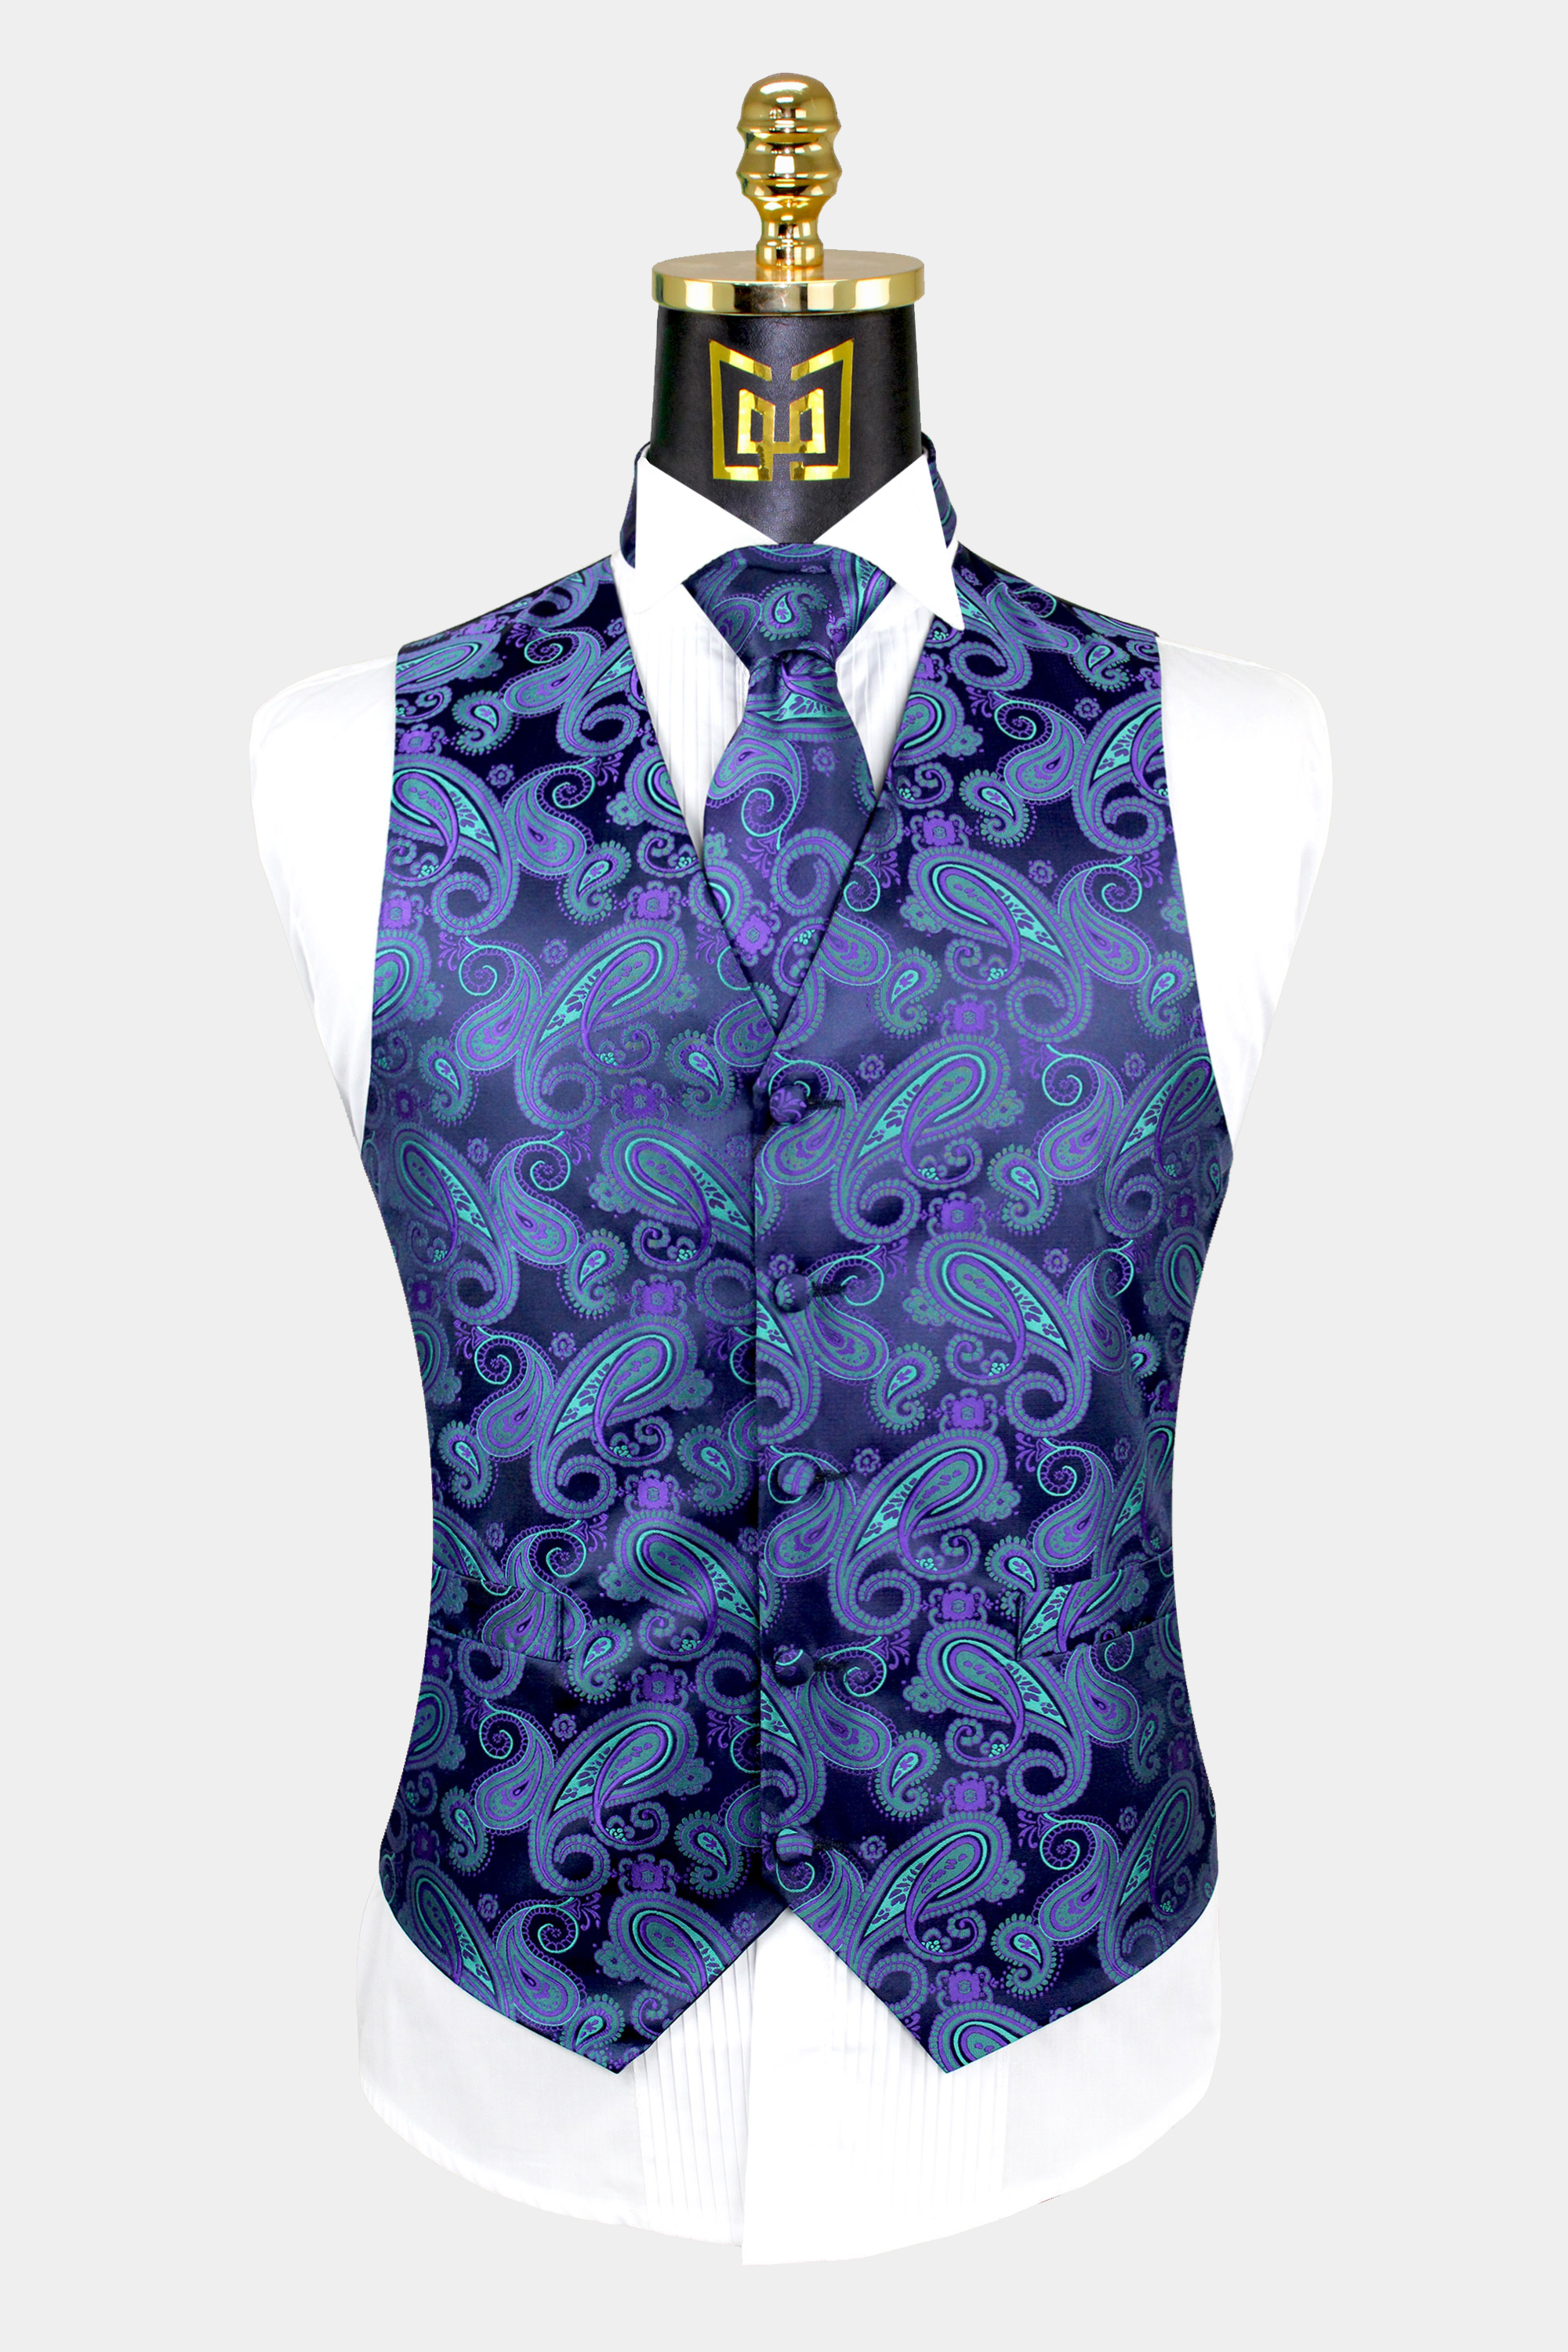 New Men's Vest & Ties Microfiber 4 Piece Full Set Formal Tuxedos Paisley TUXXMAN 